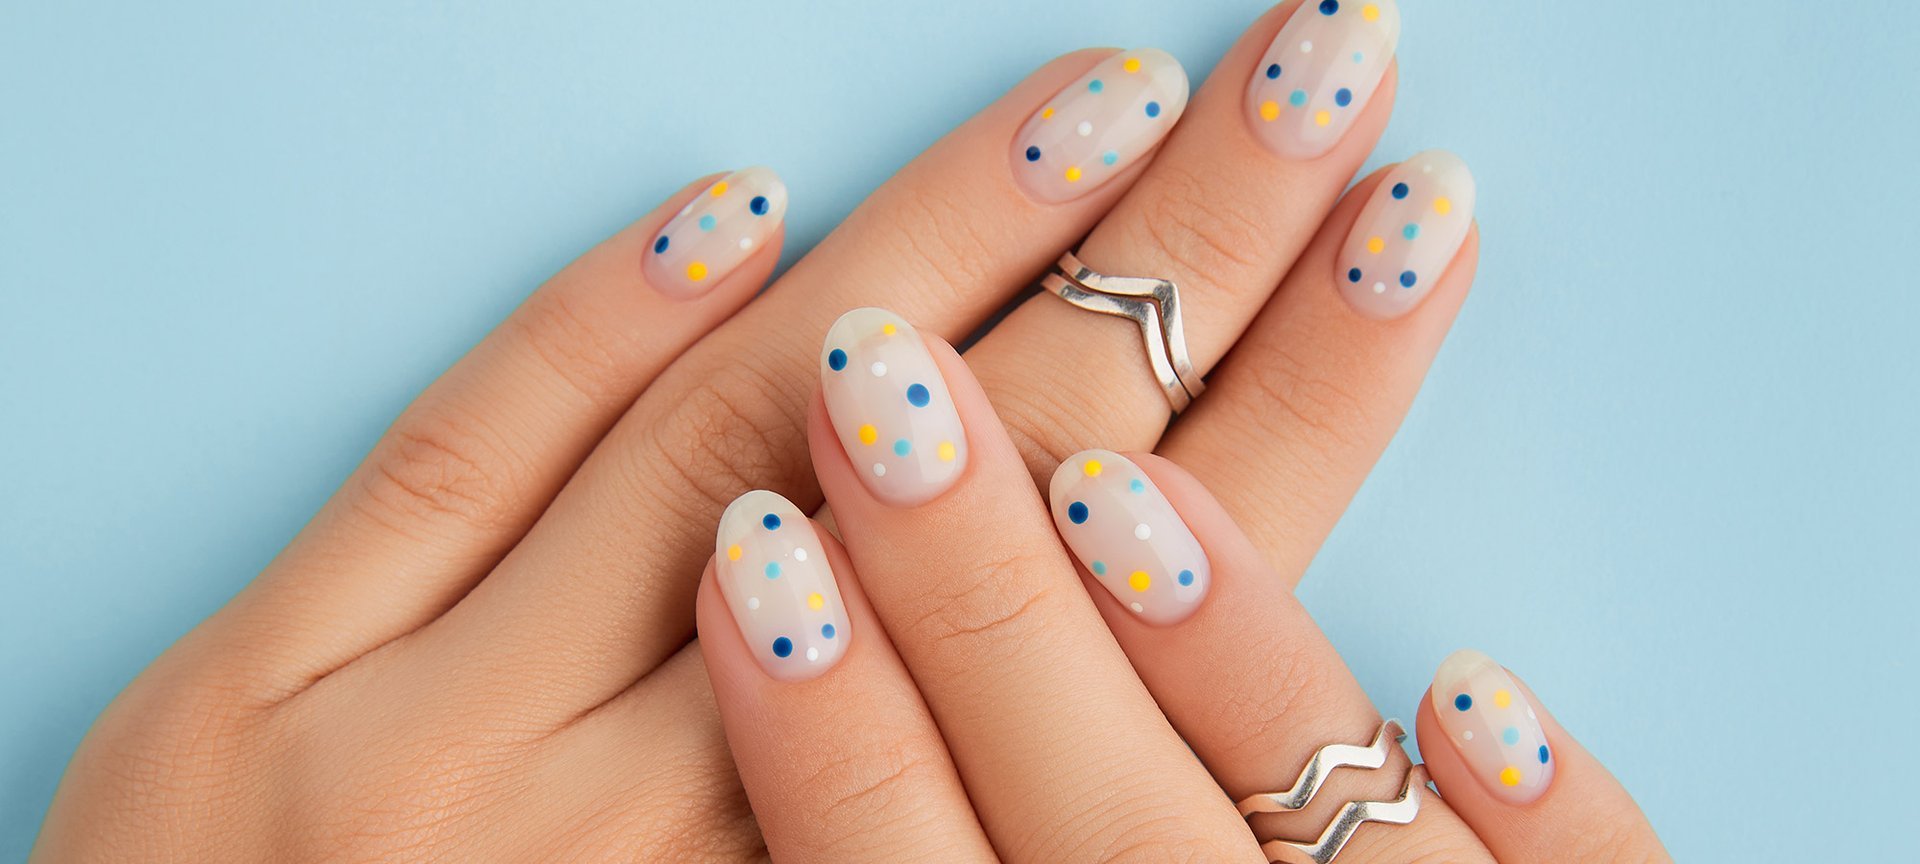 How to Do a Polka Dots Nail Art Design « Nails & Manicure :: WonderHowTo